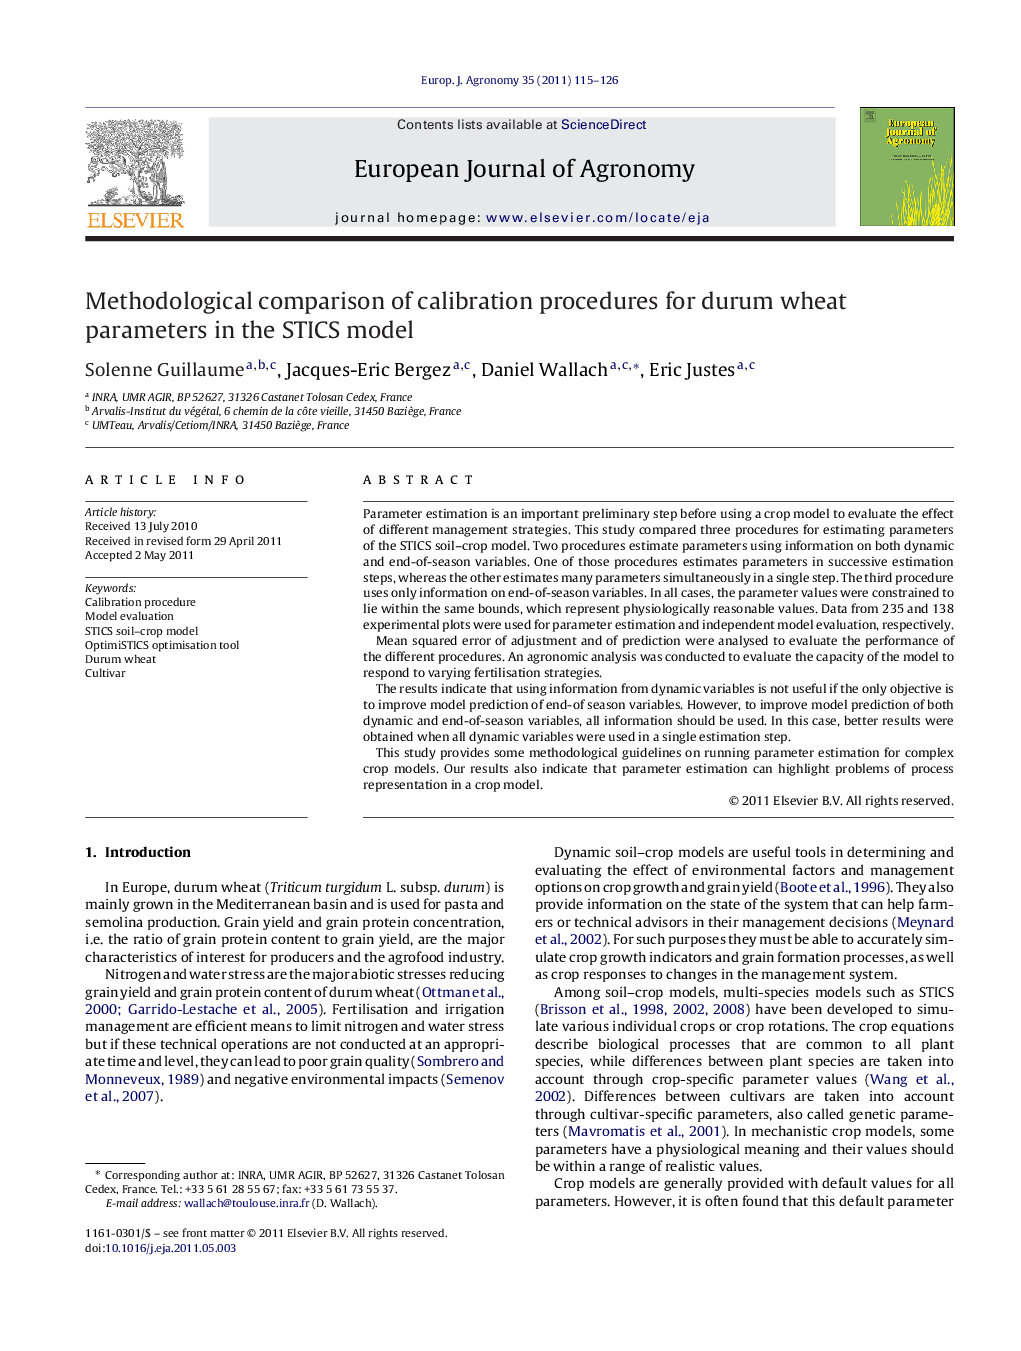 Methodological comparison of calibration procedures for durum wheat parameters in the STICS model